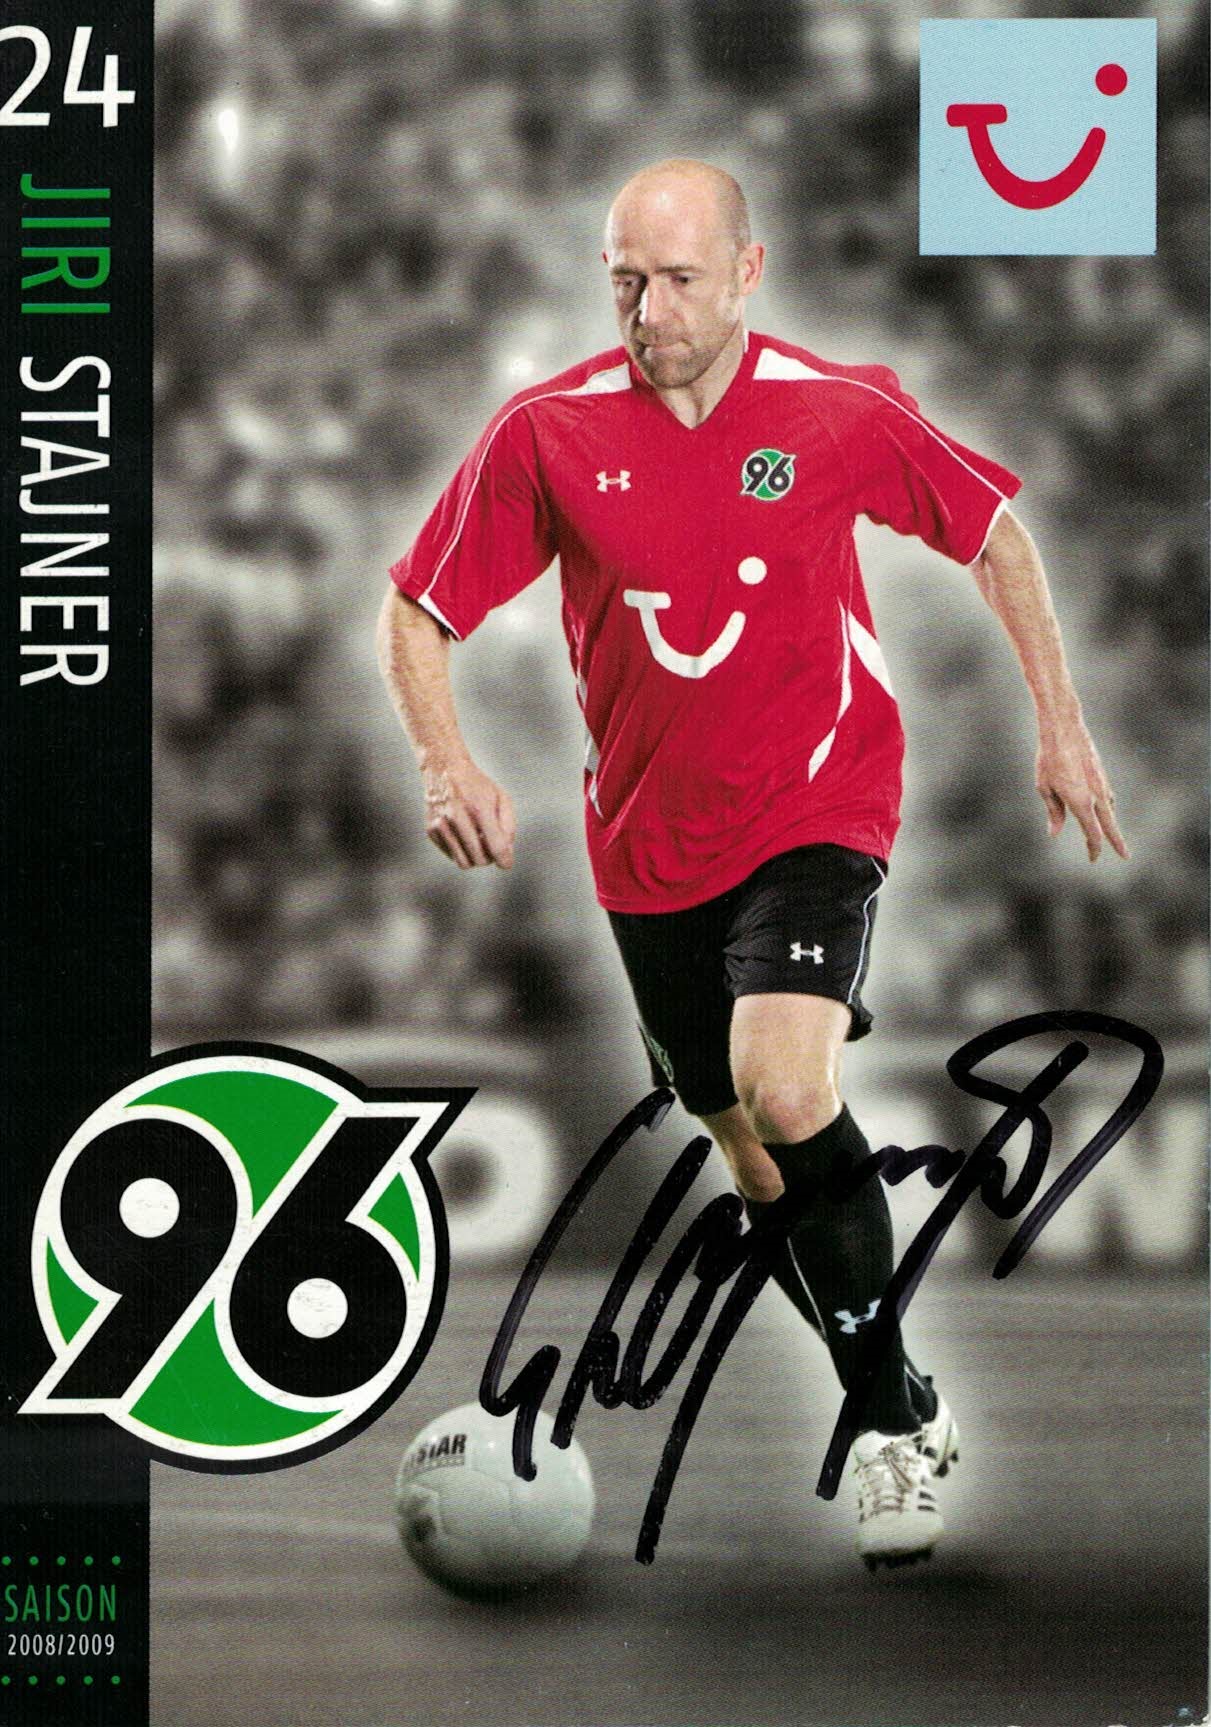 Jiri Stajner Hannover 96 2008/09 Podpisova karta autogram